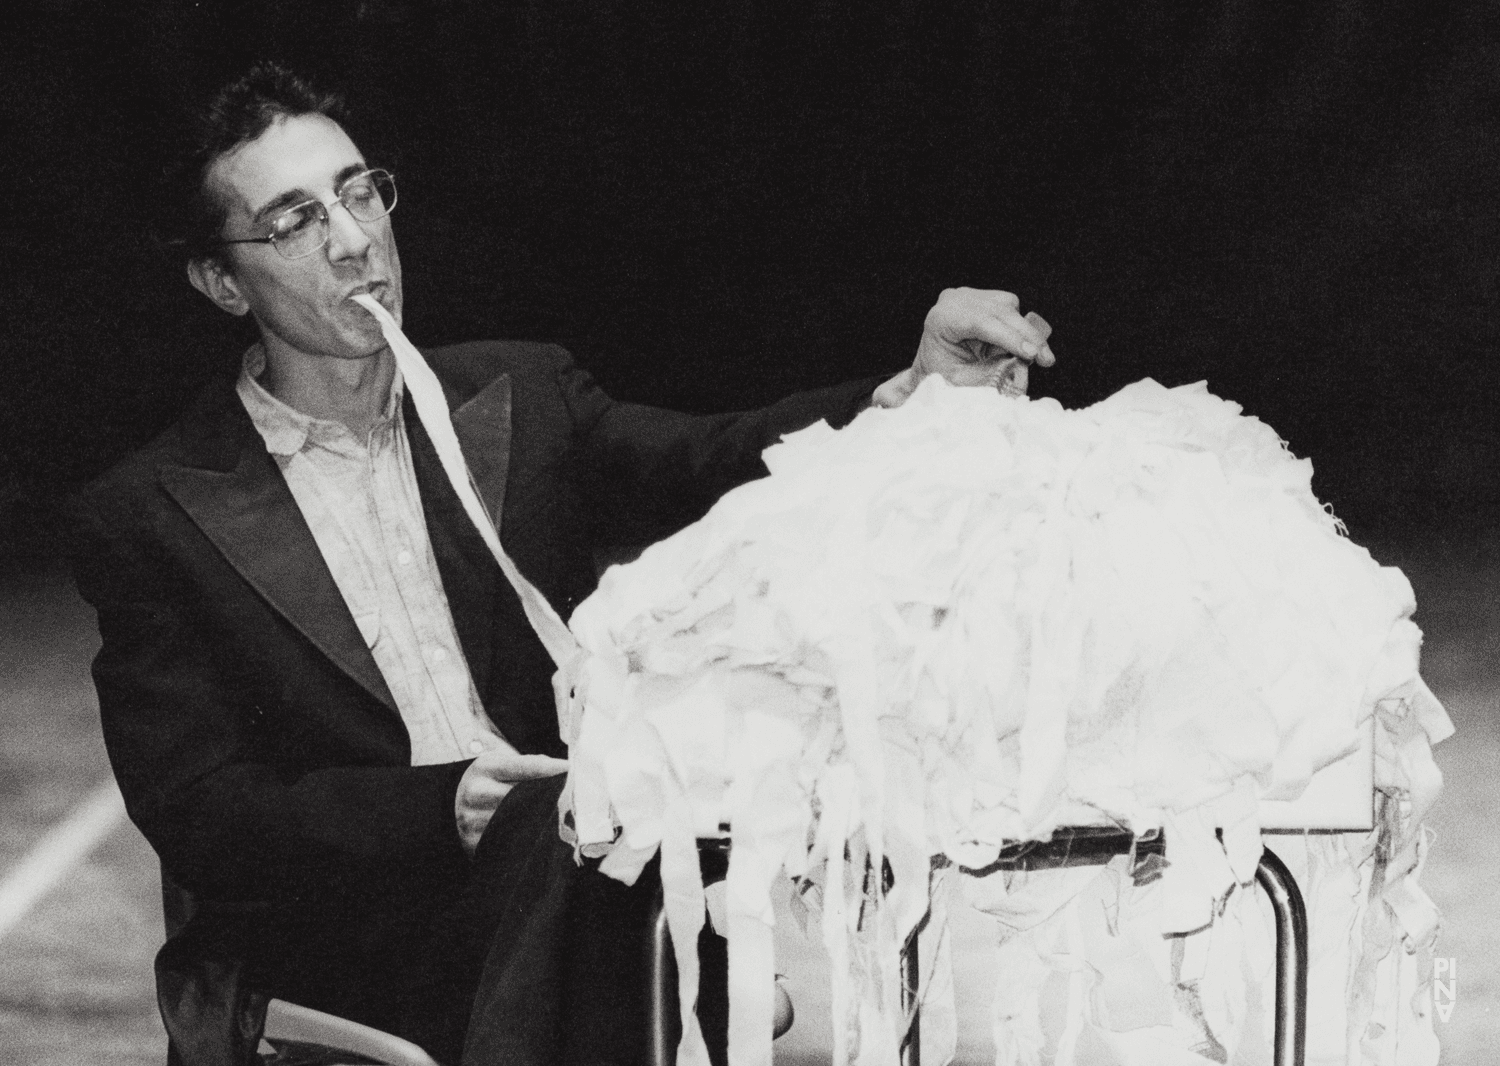 Jean Laurent Sasportes in “Viktor” by Pina Bausch at Teatro Argentina Rom